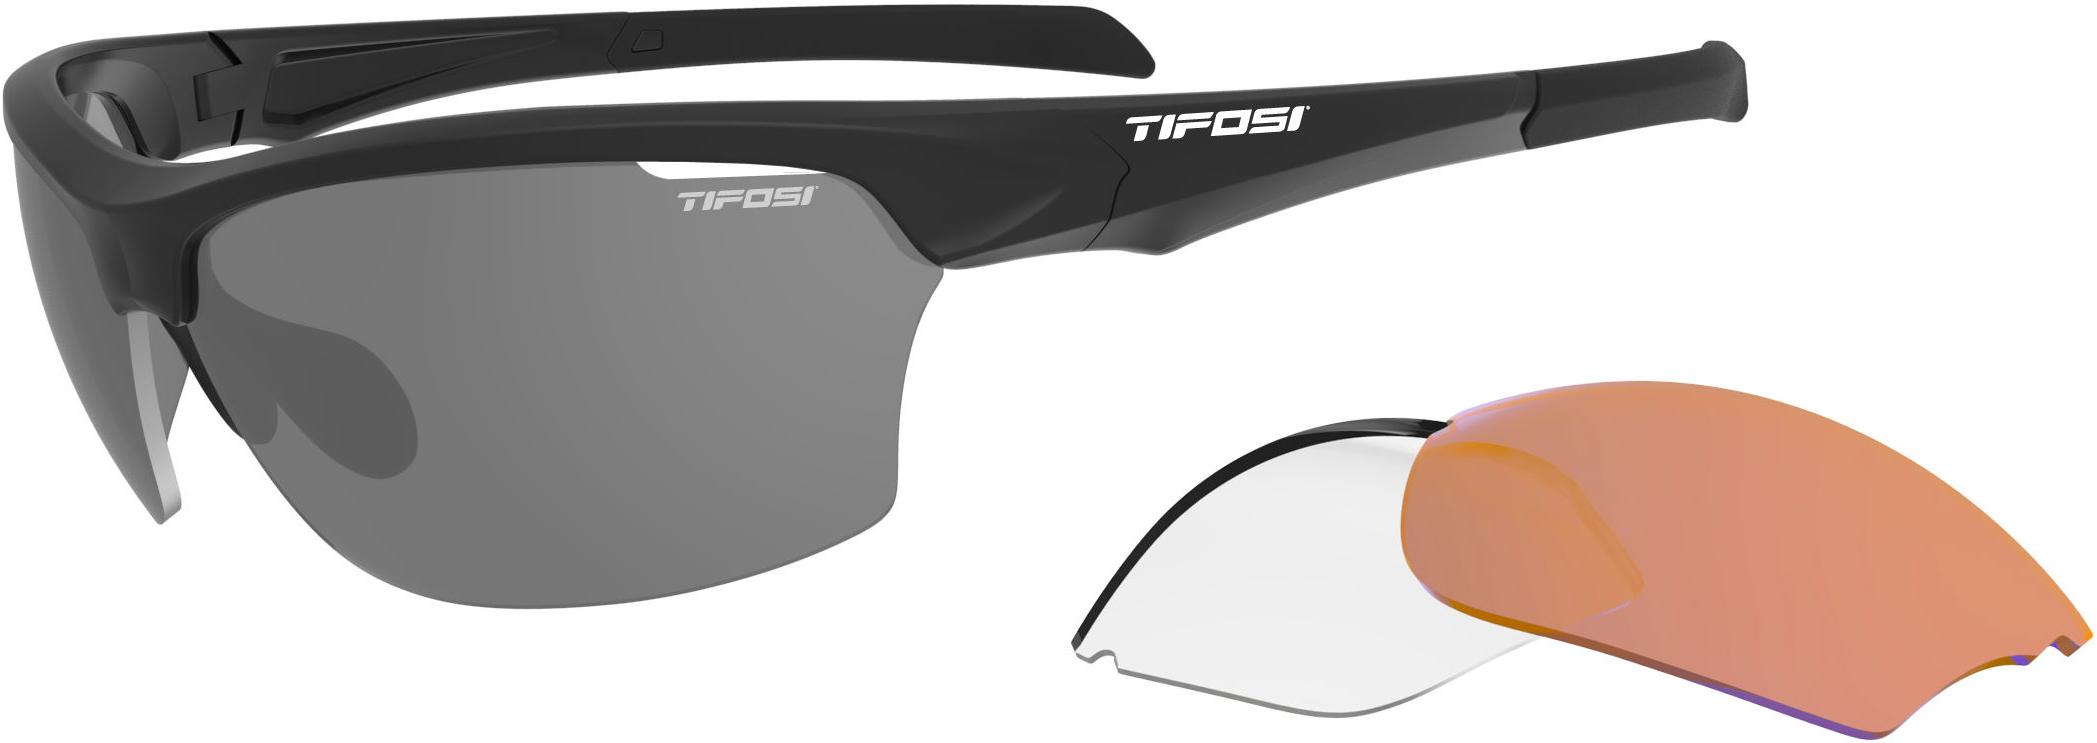 Tifosi Eyewear Intense Interchangeable Lens Sunglasses  Black